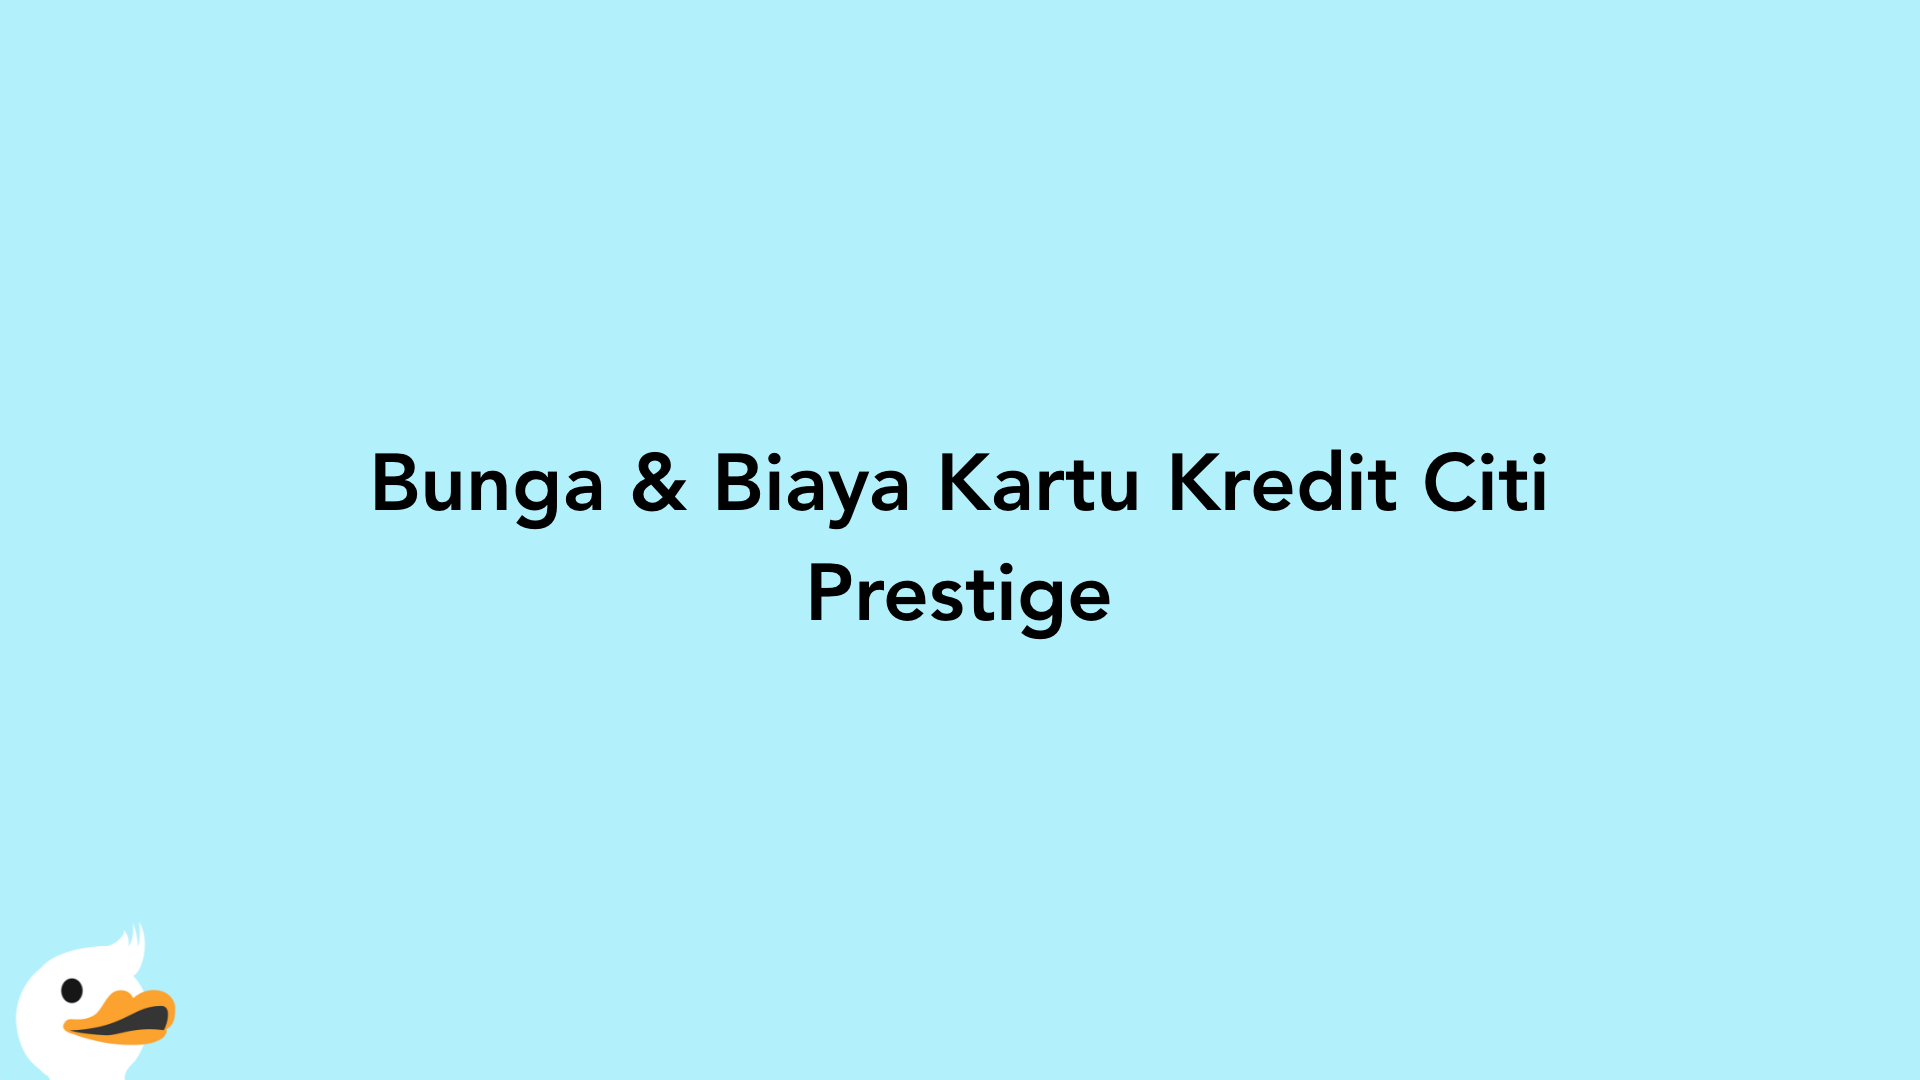 Bunga & Biaya Kartu Kredit Citi Prestige